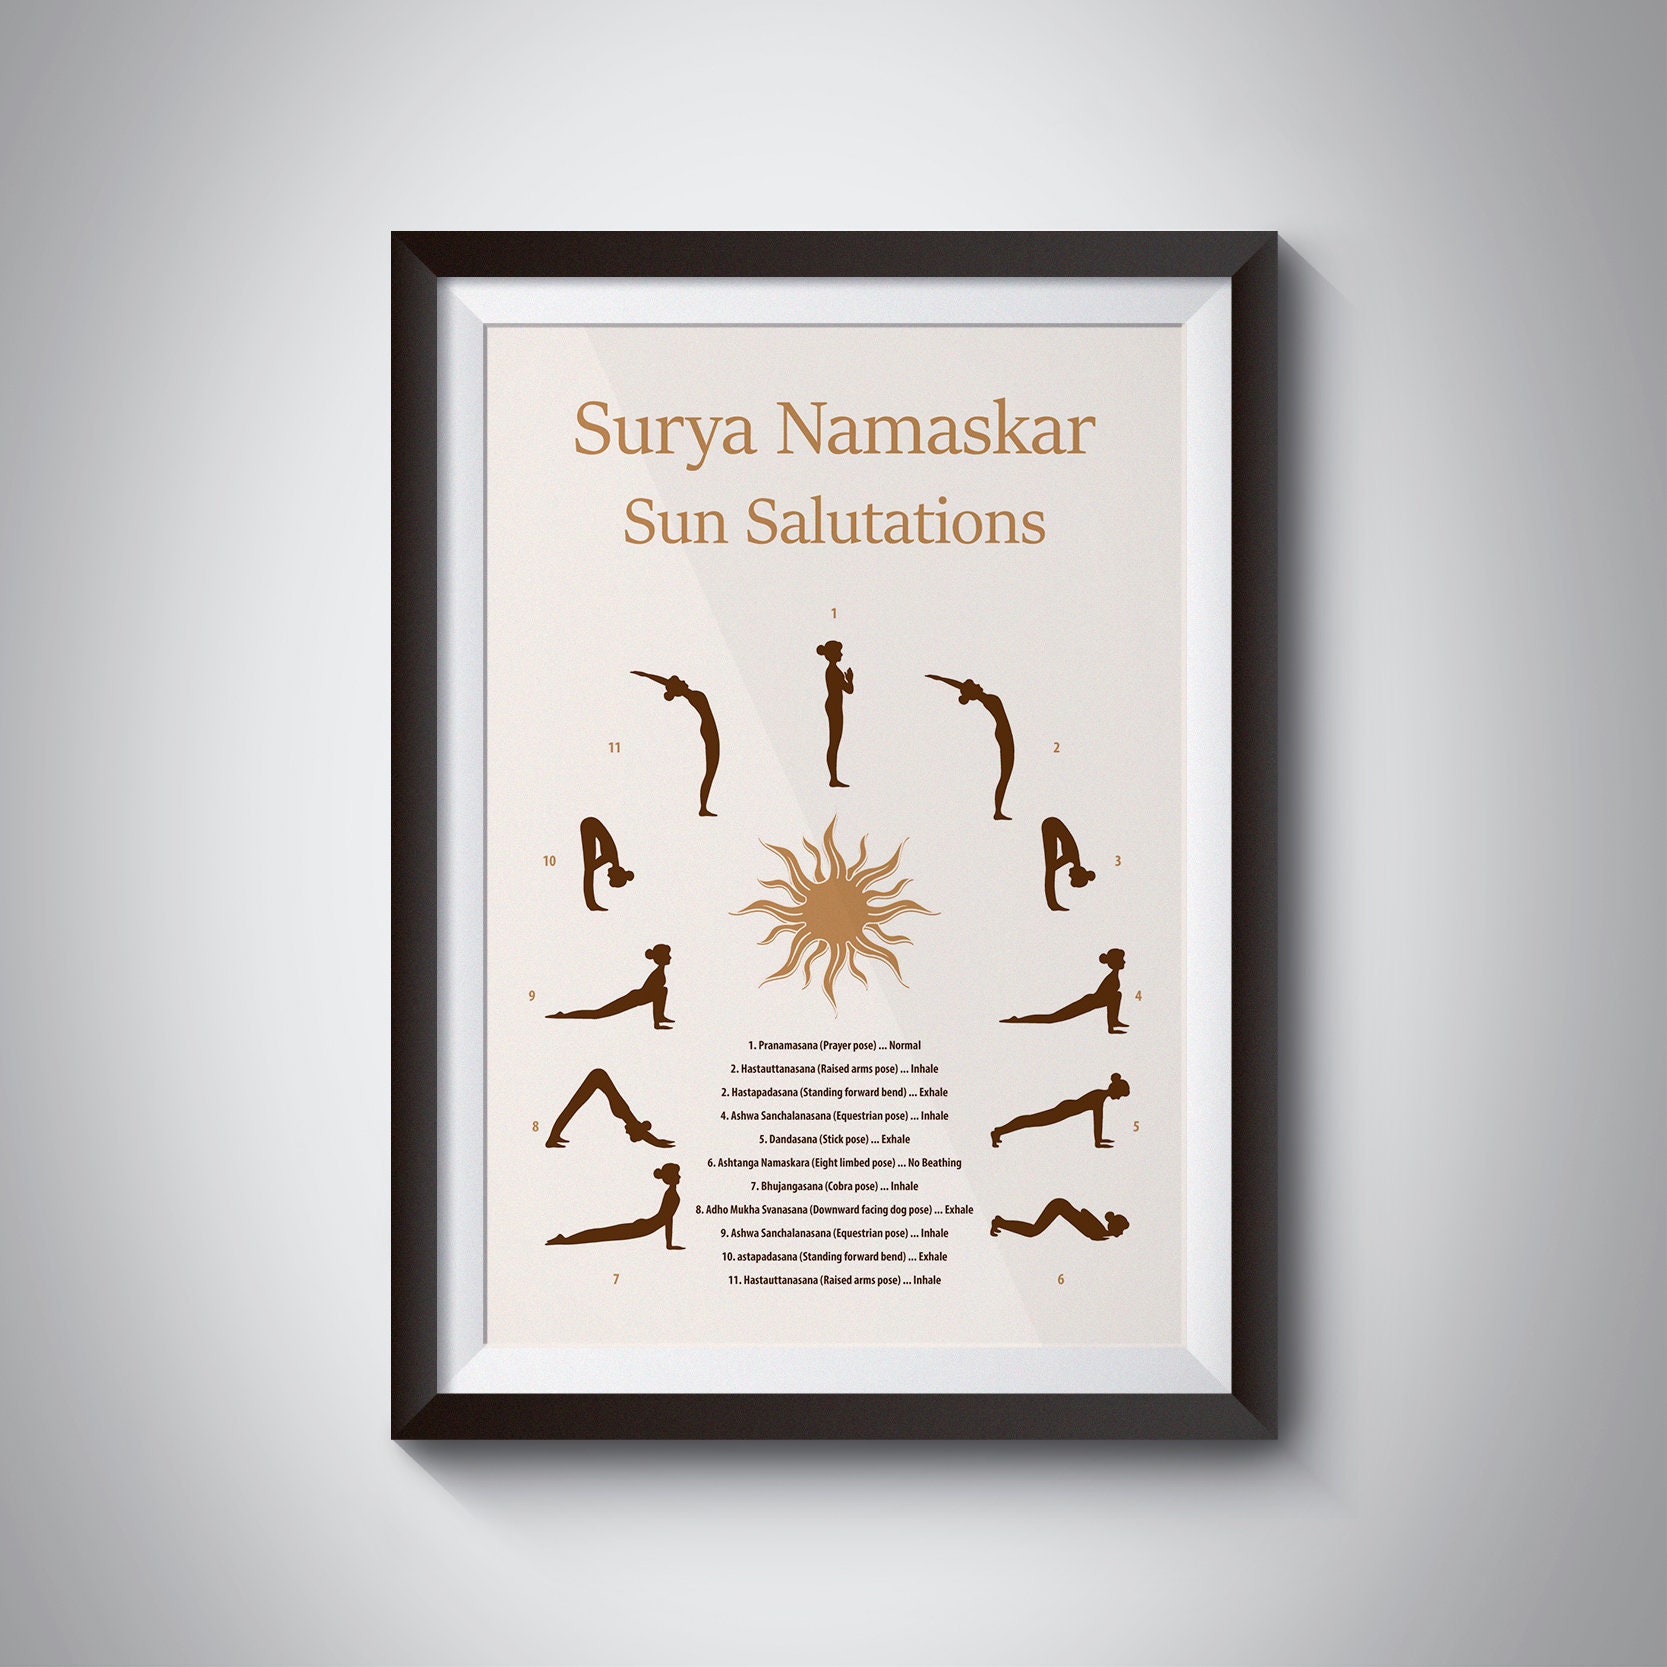 How many steps are in Surya Namaskar Asan? - Quora